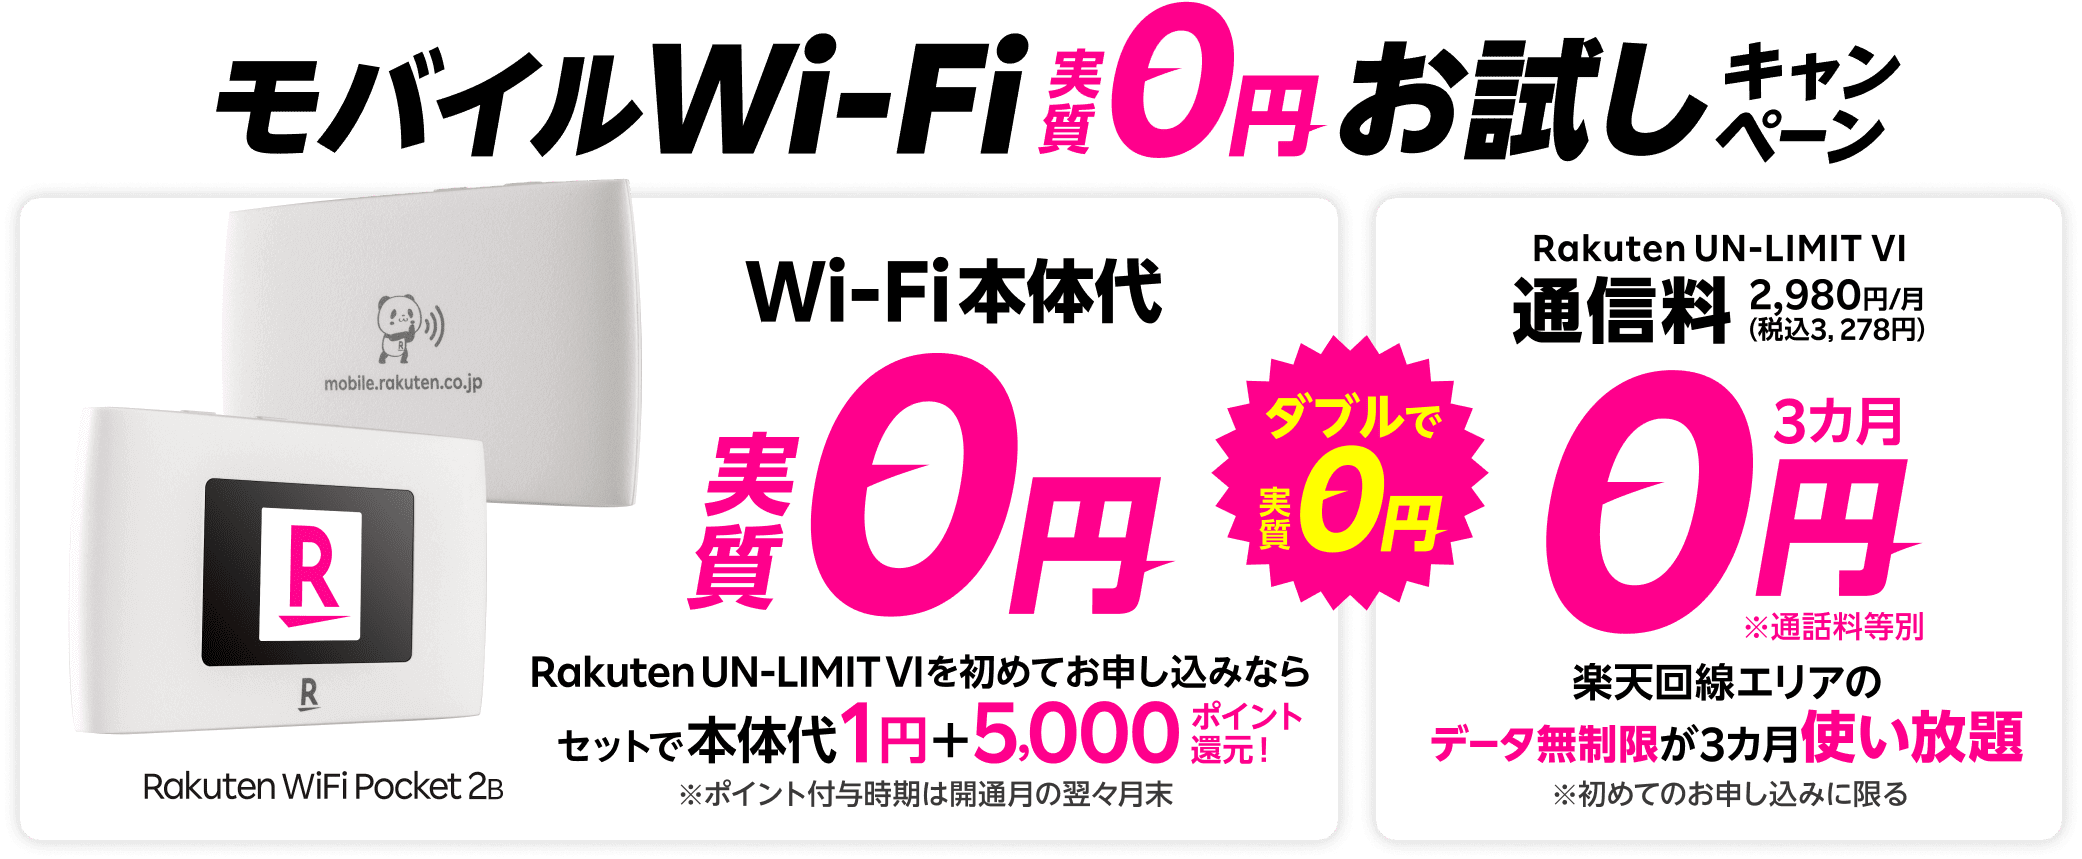 rakuten-wifi-pocket-2b-campaign